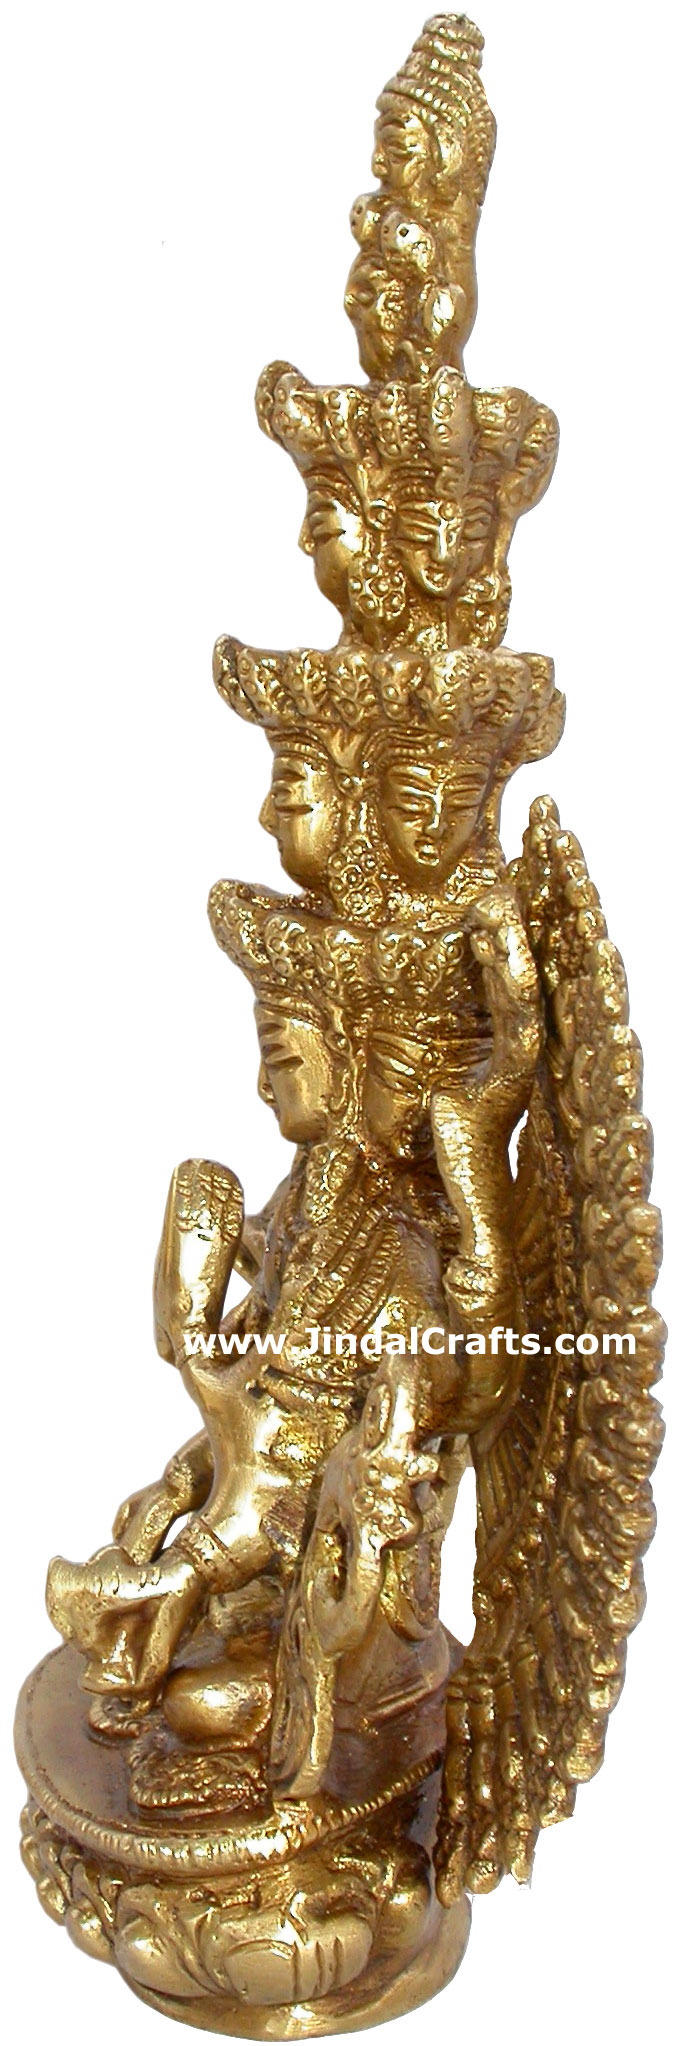 Tara Statue Buddhism Tibetan Religious Sculpture Arts Indian Handicrafts Crafts